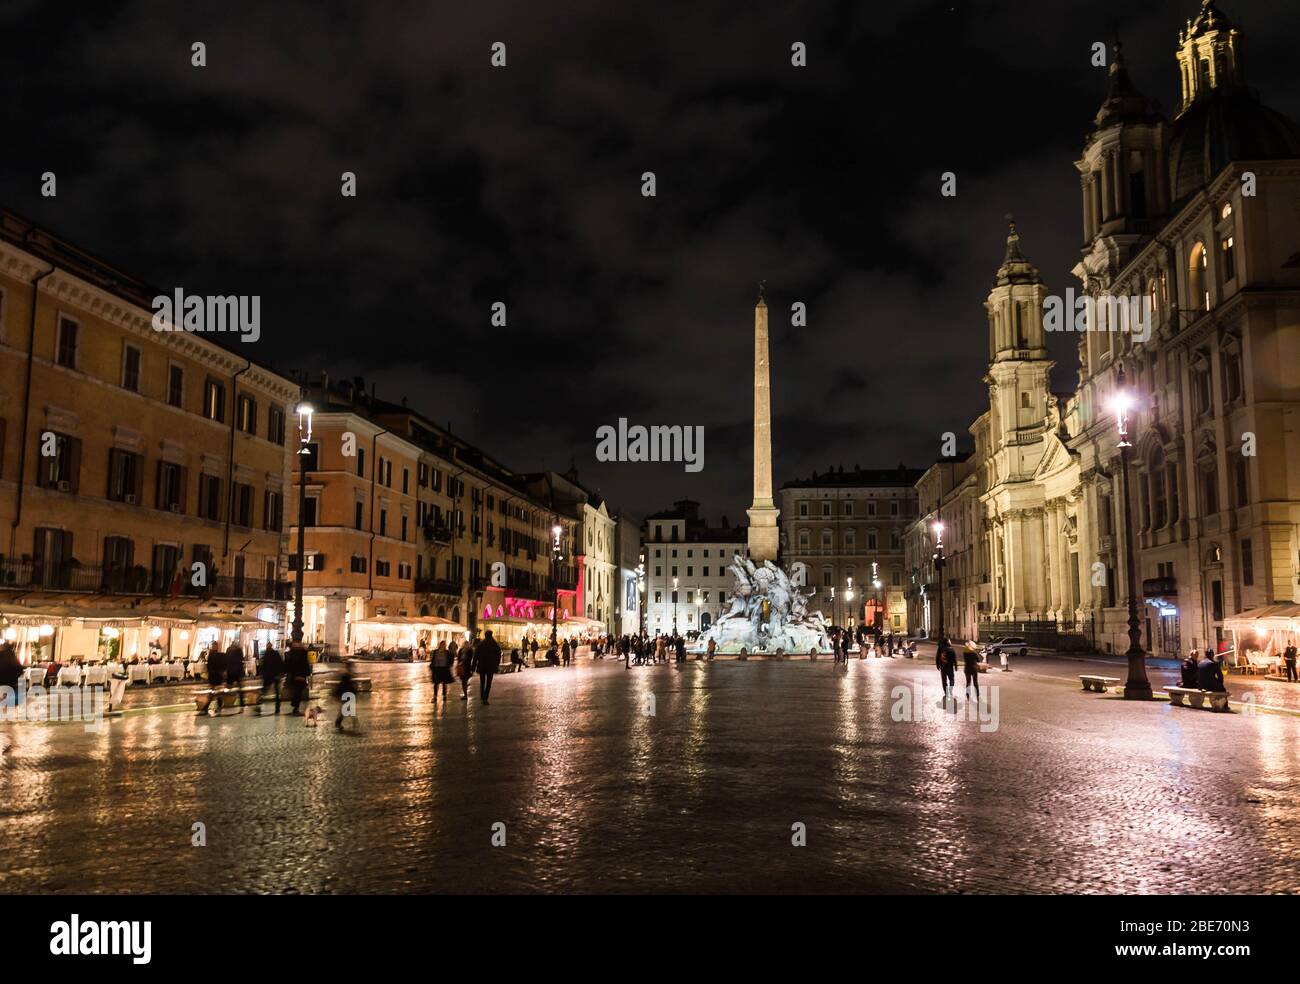 Night view of Piazza Navona, Rome, Italy Stock Photo - Alamy